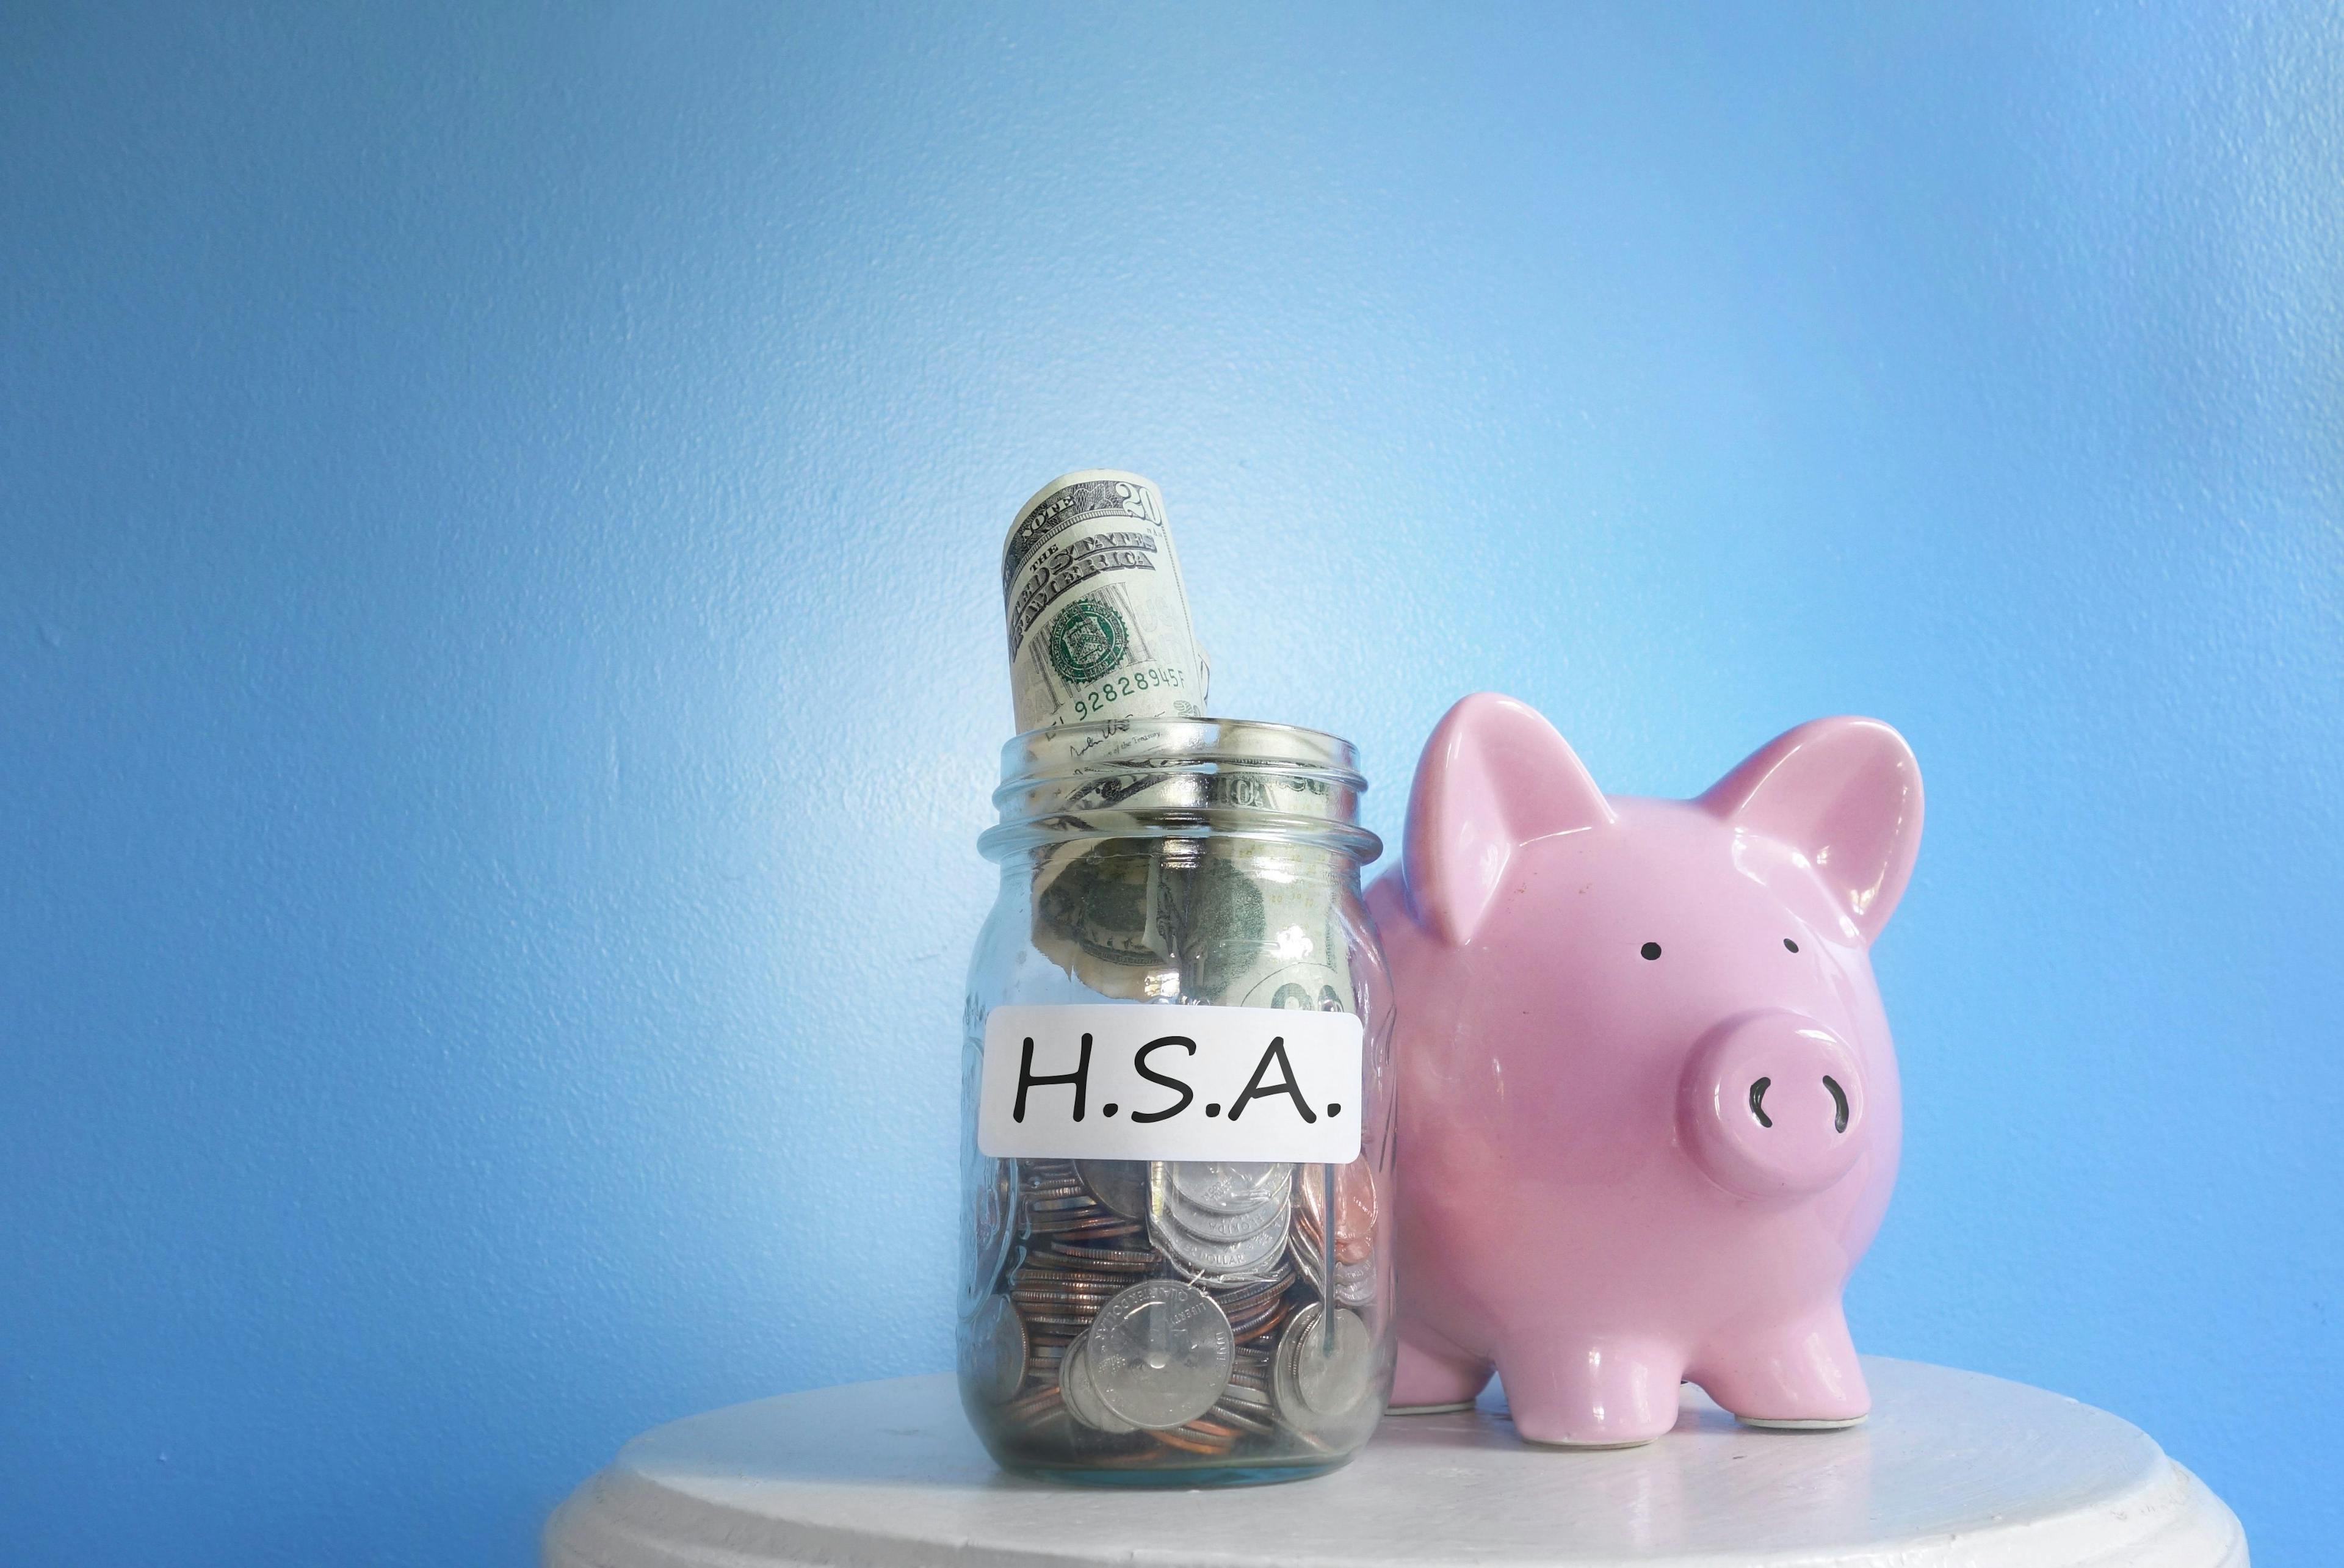 HSA savings account money | zimmytws - stock.adobe.com